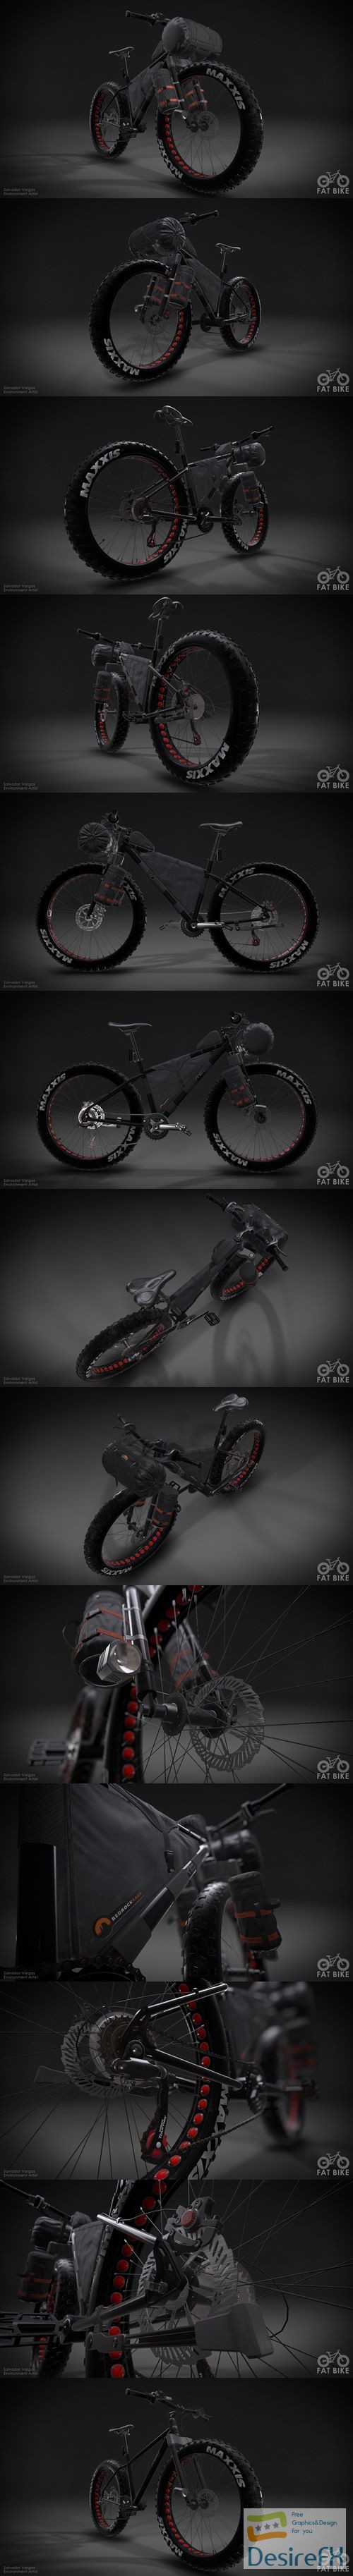 The Fat Bike 3D Model